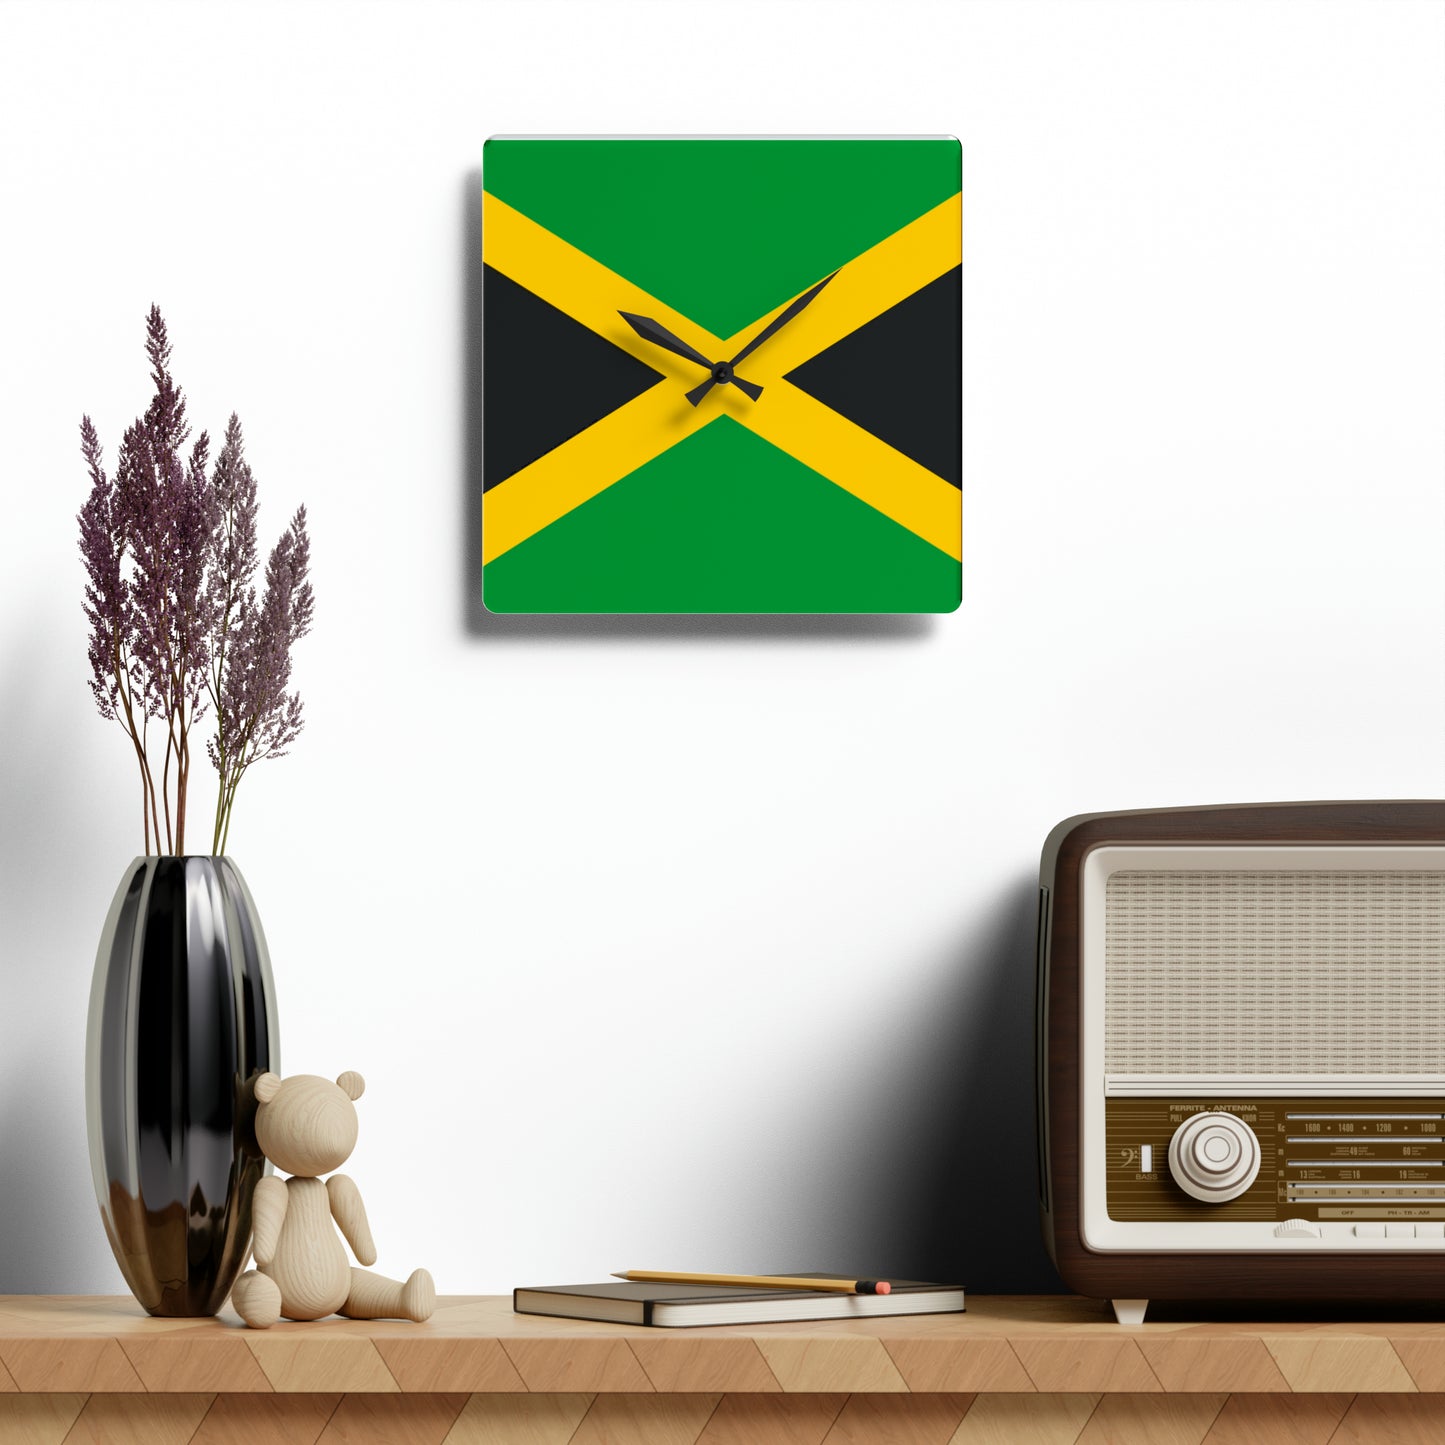 Jamaica Acrylic Wall Clock